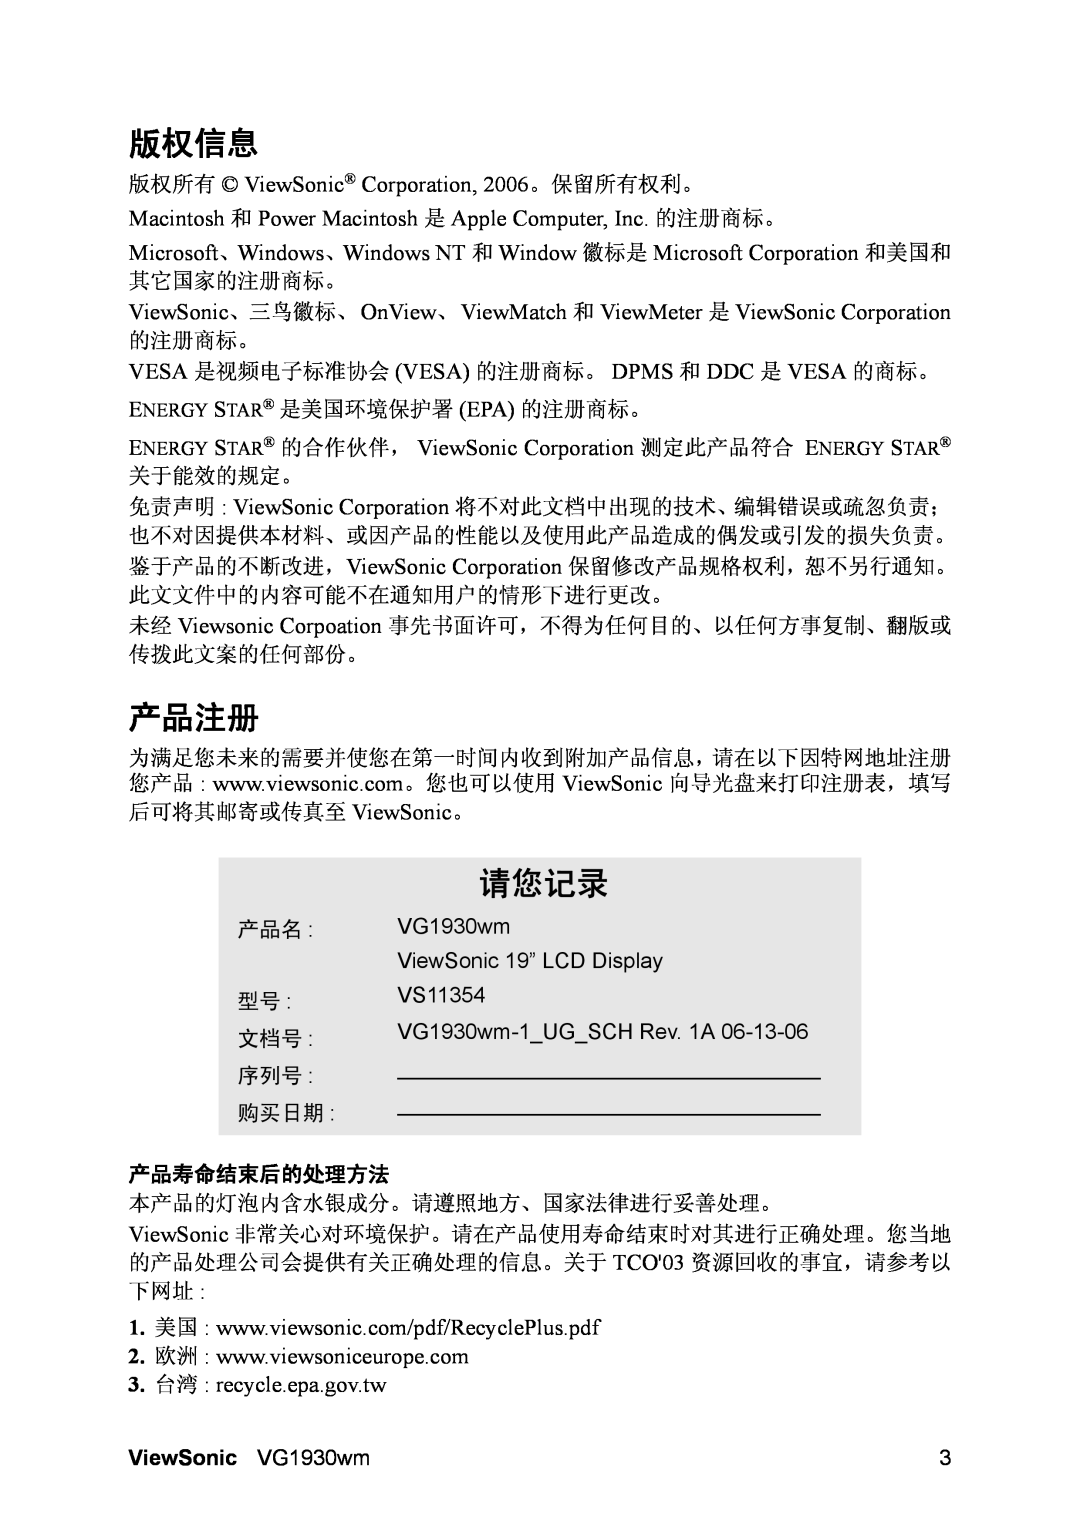 ViewSonic manual 版权信息, 产品注册, 请您记录, 3.台湾 : recycle.epa.gov.tw, 产品寿命结束后的处理方法, ViewSonic VG1930wm 